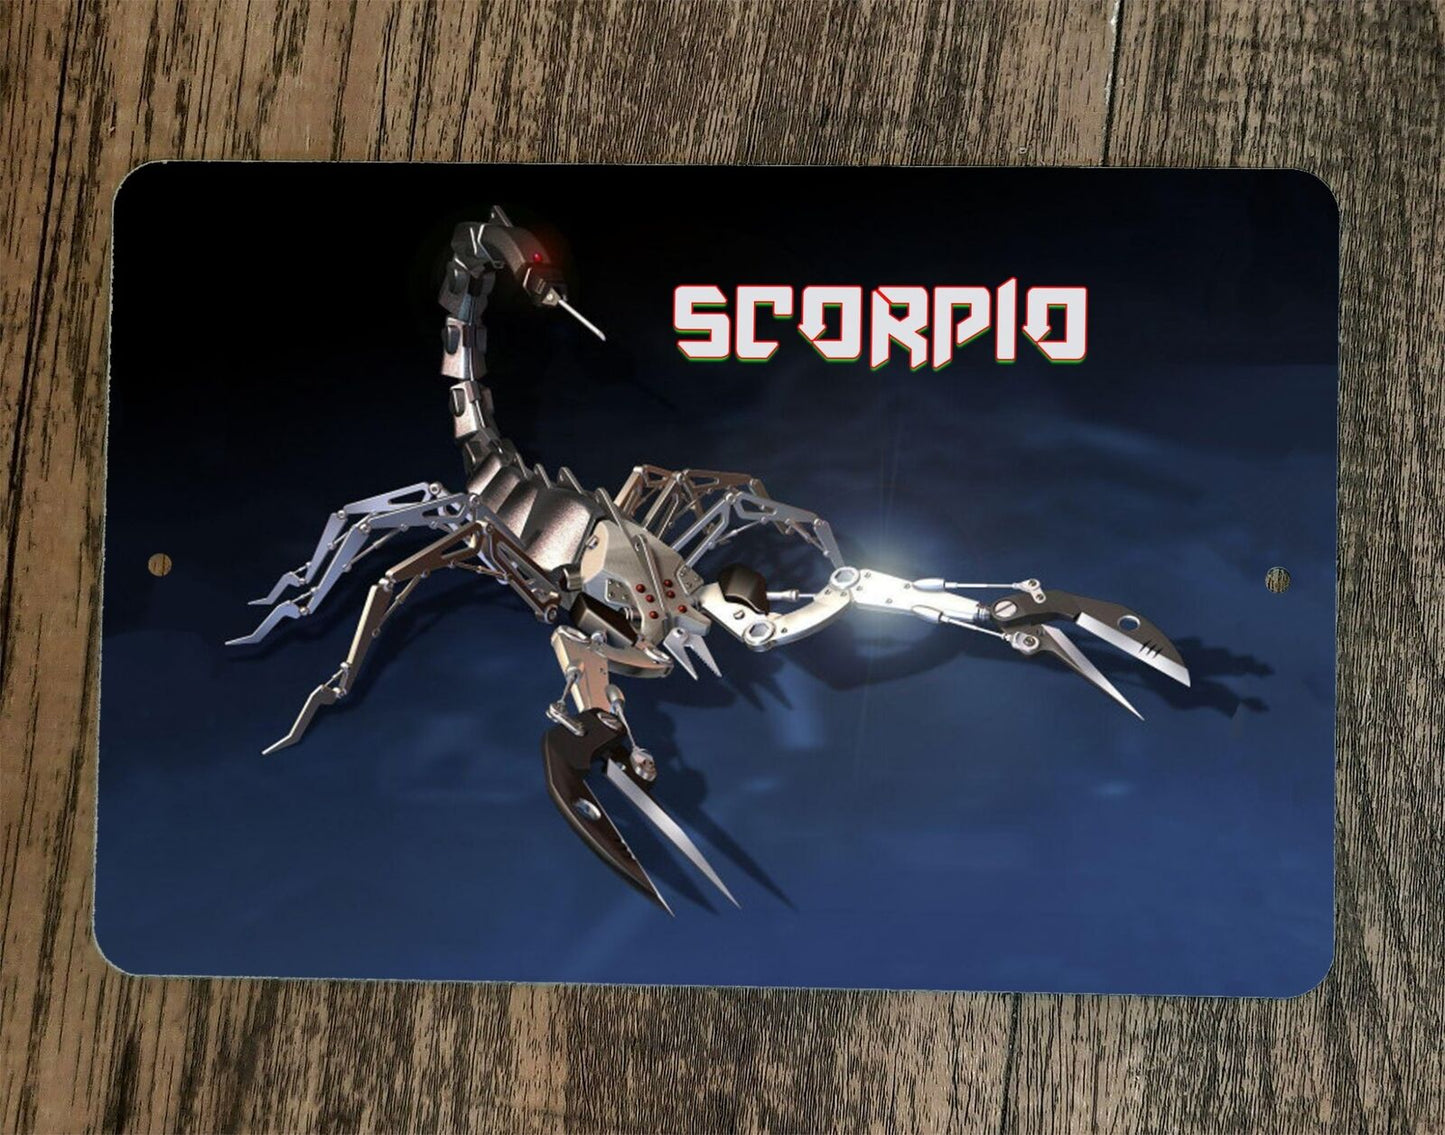 Scorpio Scorpion 8x12 Metal Wall Zodiac Astrology Sign